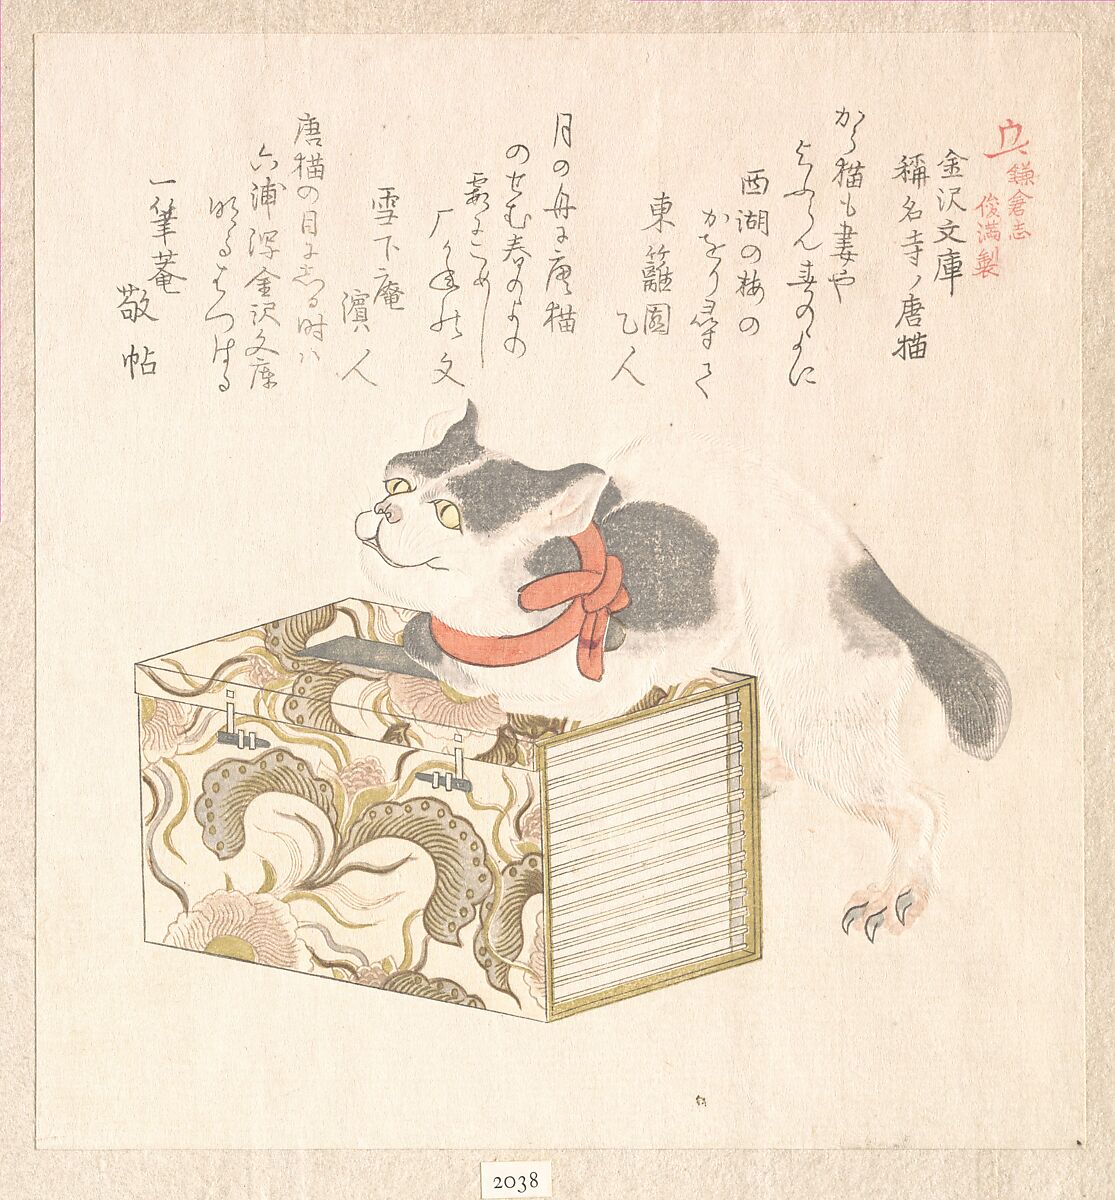 Spring Rain Collection (Harusame shū), vol. 1: “Books from Kanazawa Library” (Kanazawa Bunko) and “Foreign Cat of Shōmyōji Temple” (Shōmyōji no kara neko), from the series History of Kamakura (Kamakura shi), Kubo Shunman (Japanese, 1757–1820), Privately published woodblock prints (surimono) mounted in an album; ink and color on paper, Japan 